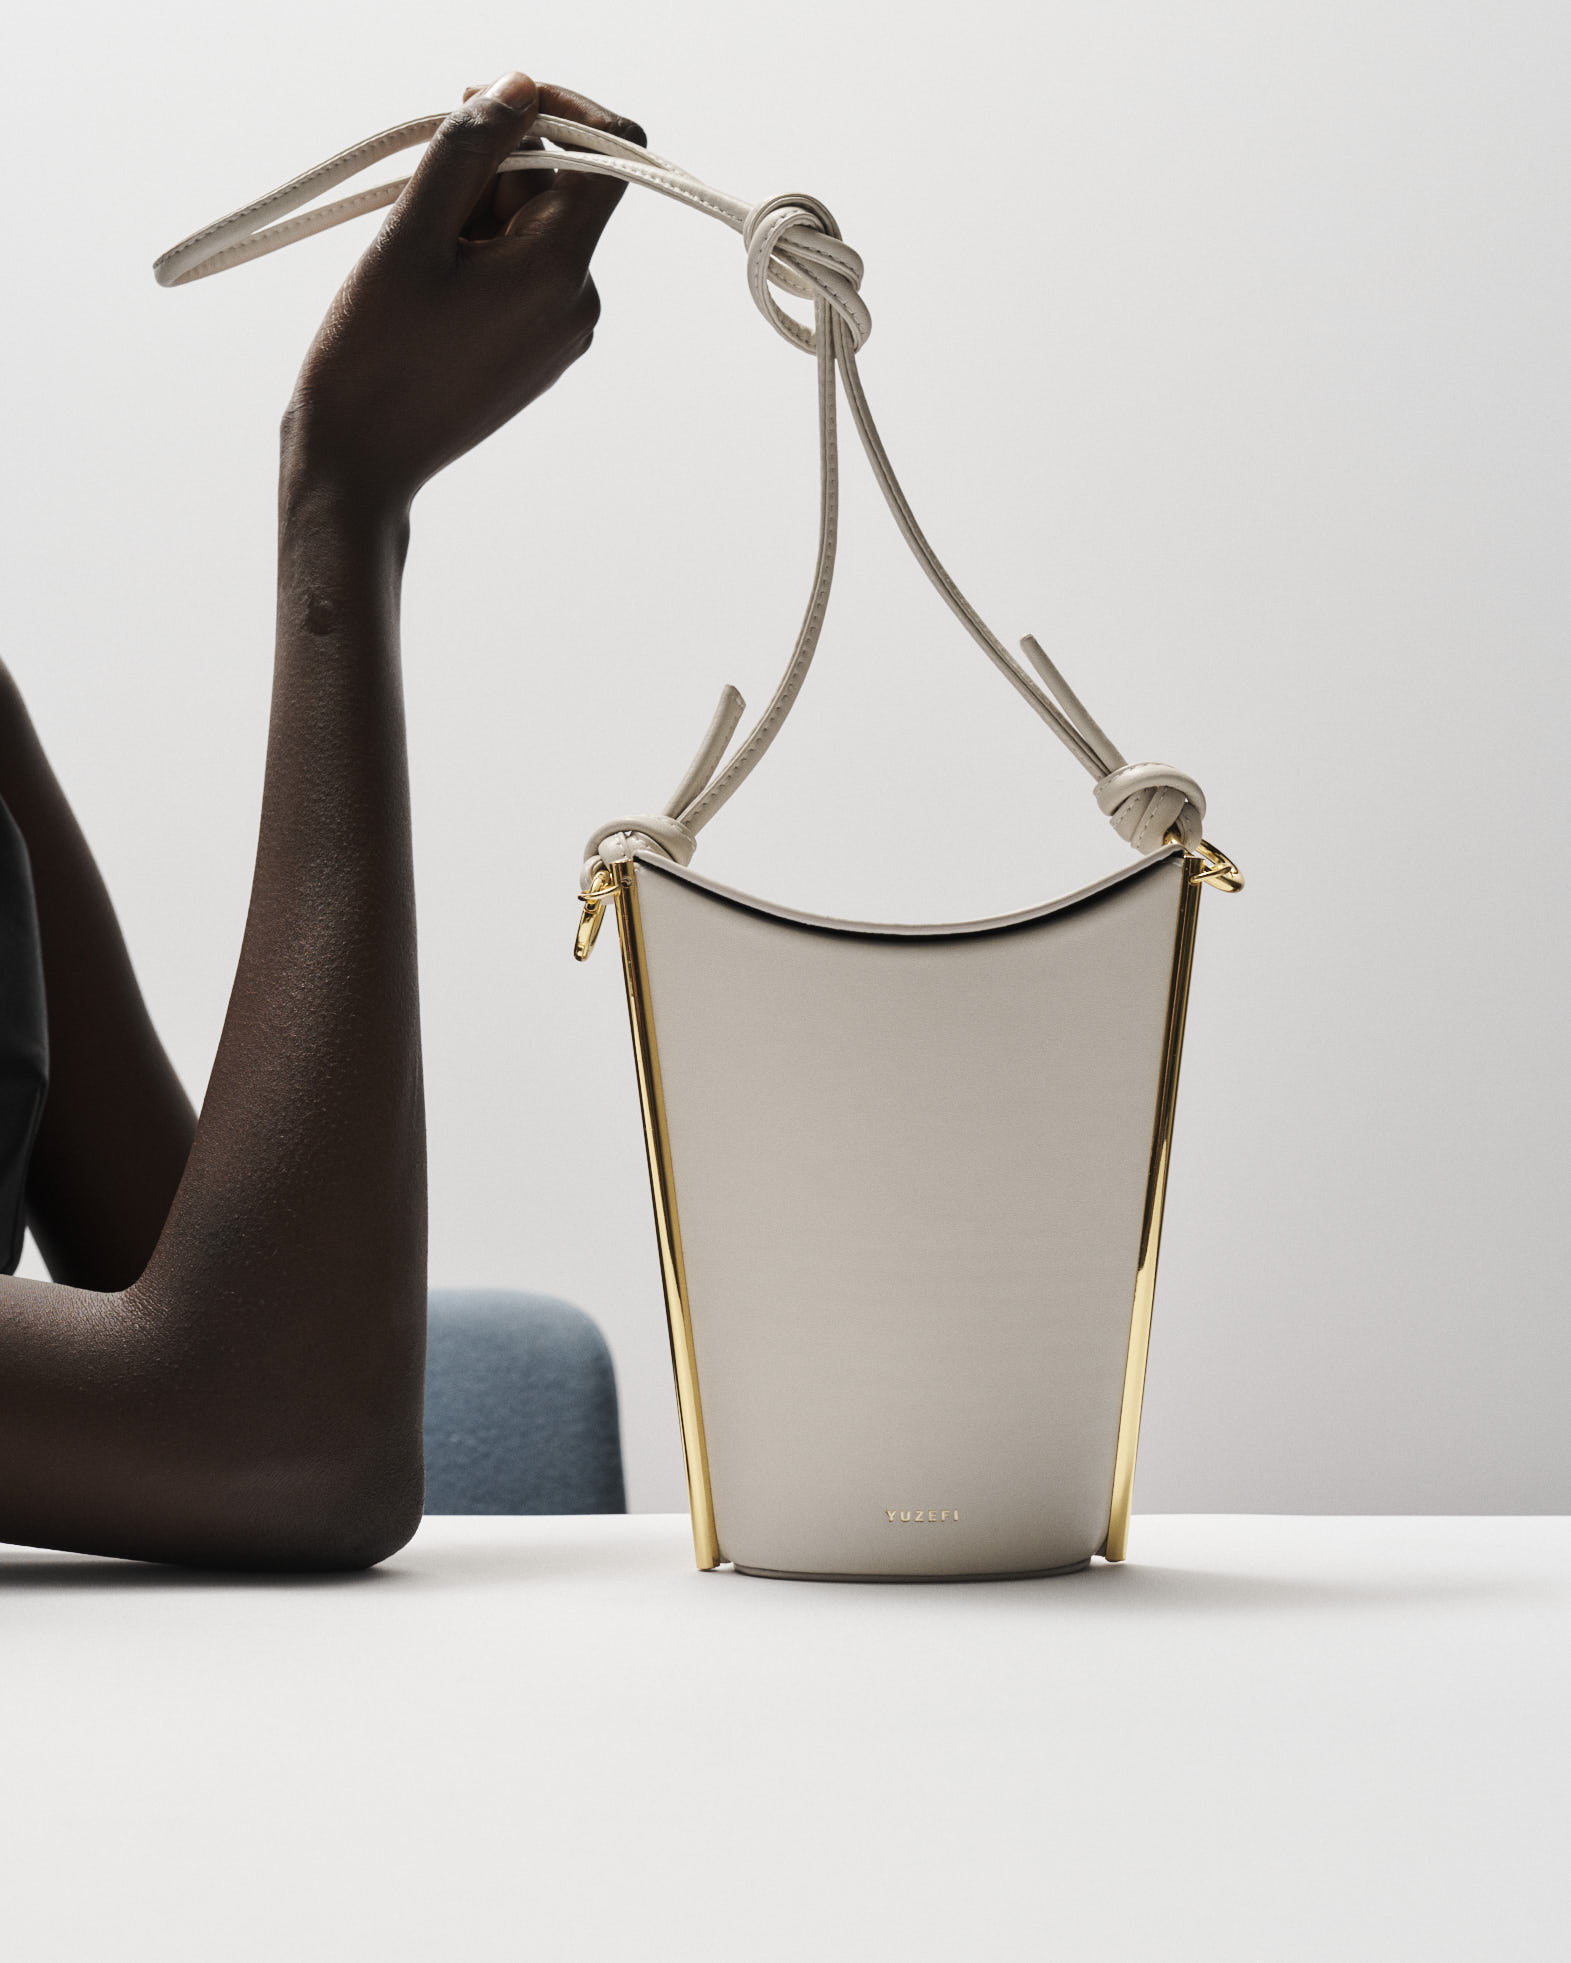 Yuzefi Handbags Are Both Fashion Forward and Classic | NUVO